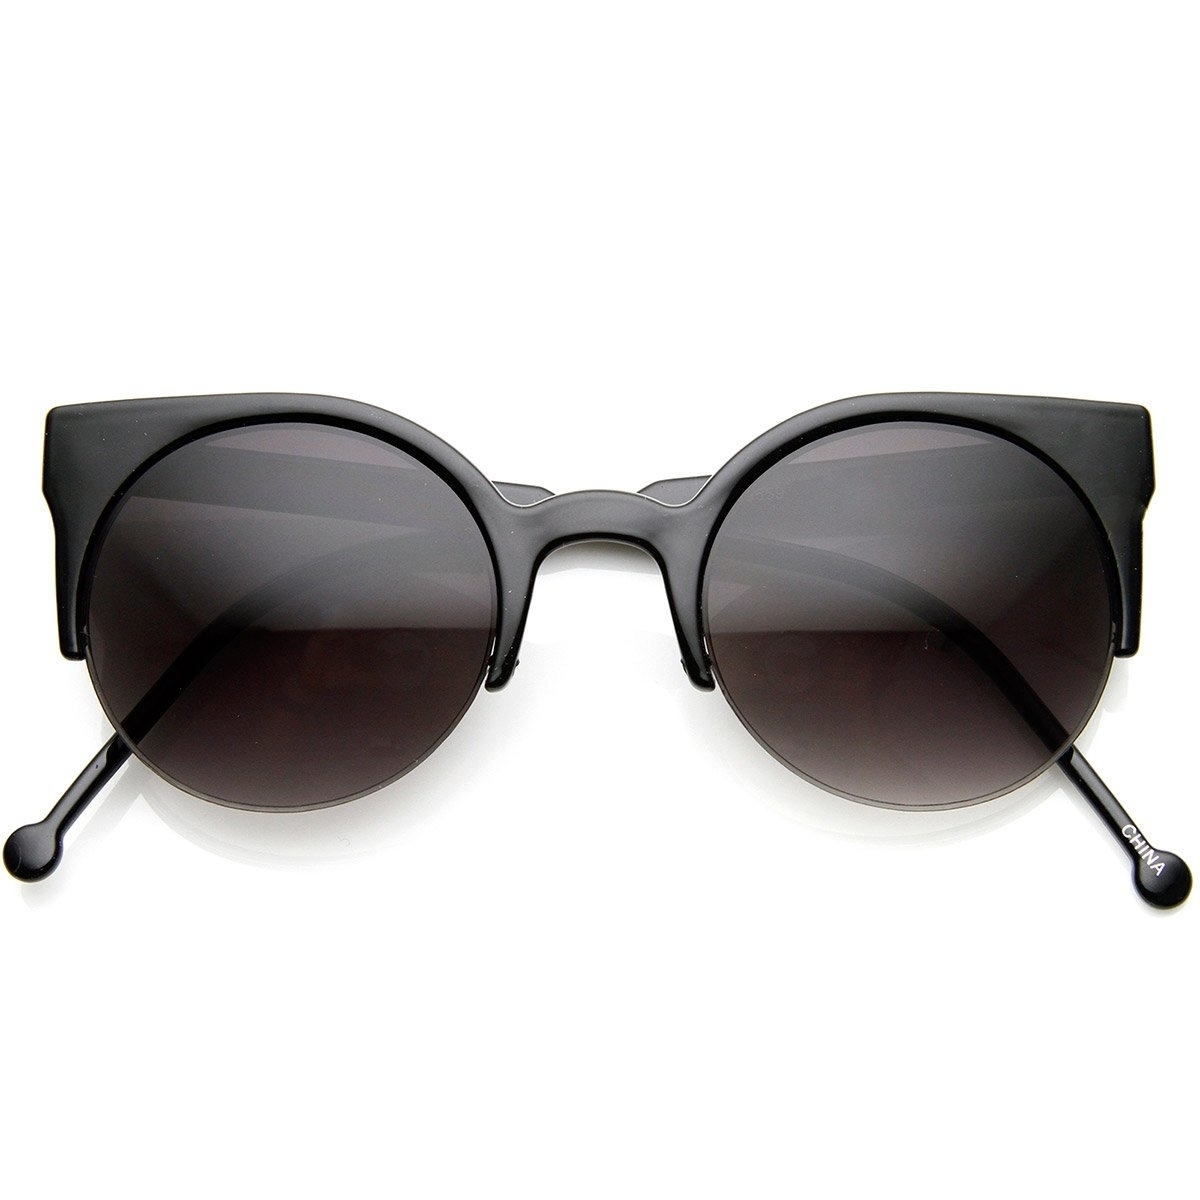 Womens Fashion Half Frame Round Cateye Sunglasses - Tortoise Green